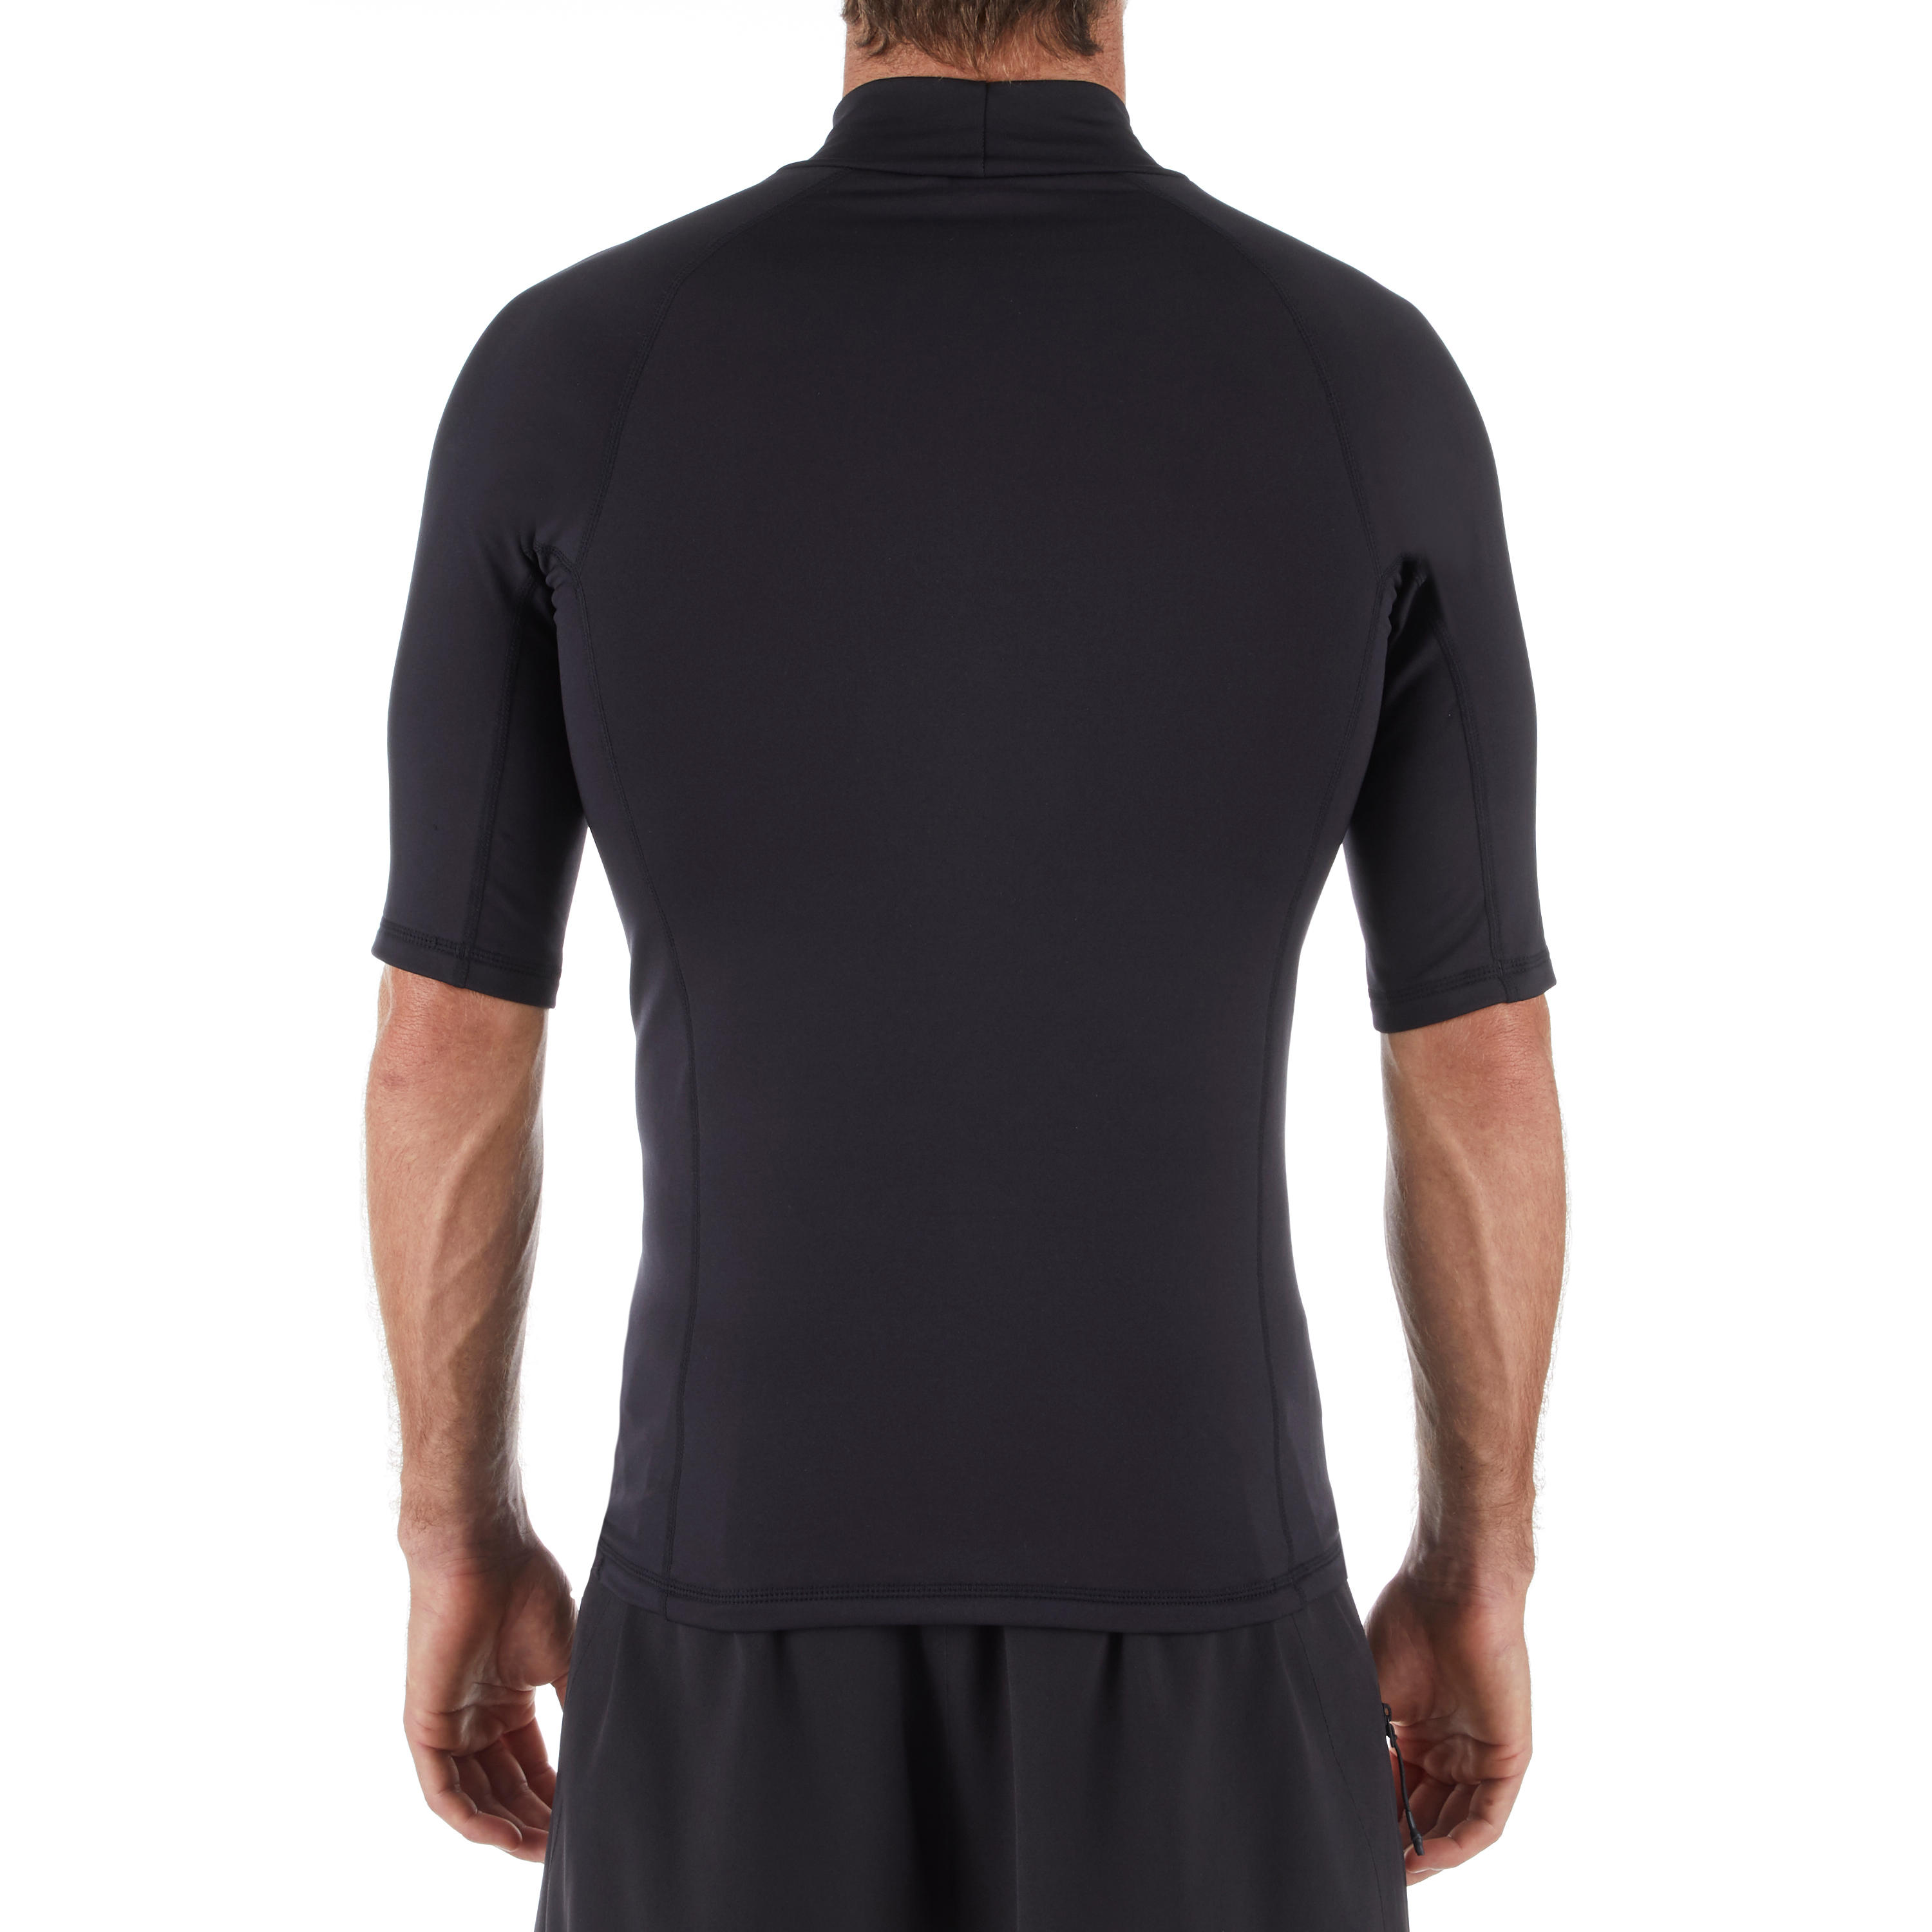 Men's surfing short-sleeve thermal fleece top T-shirt 900 - Black 2/5